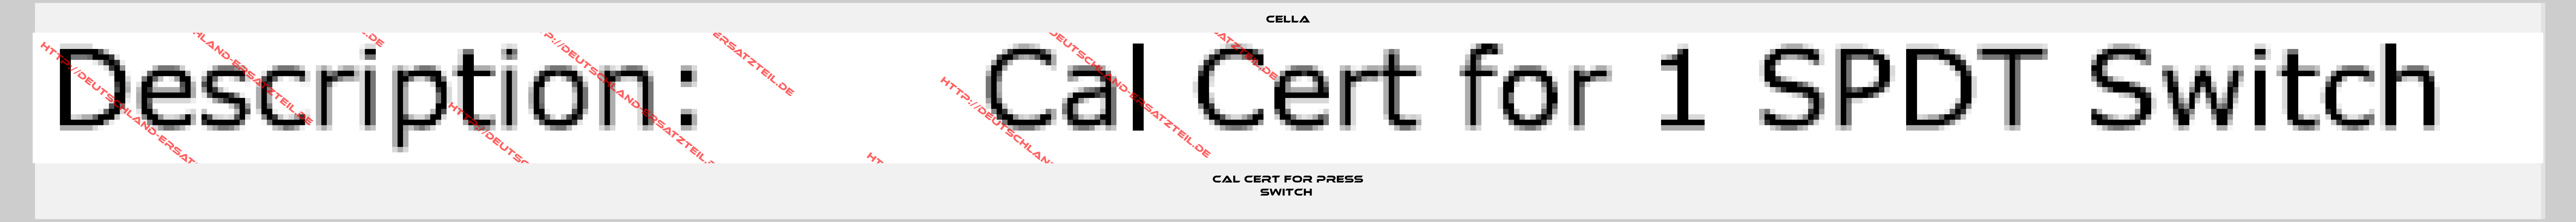 Cella-Cal Cert for Press Switch 